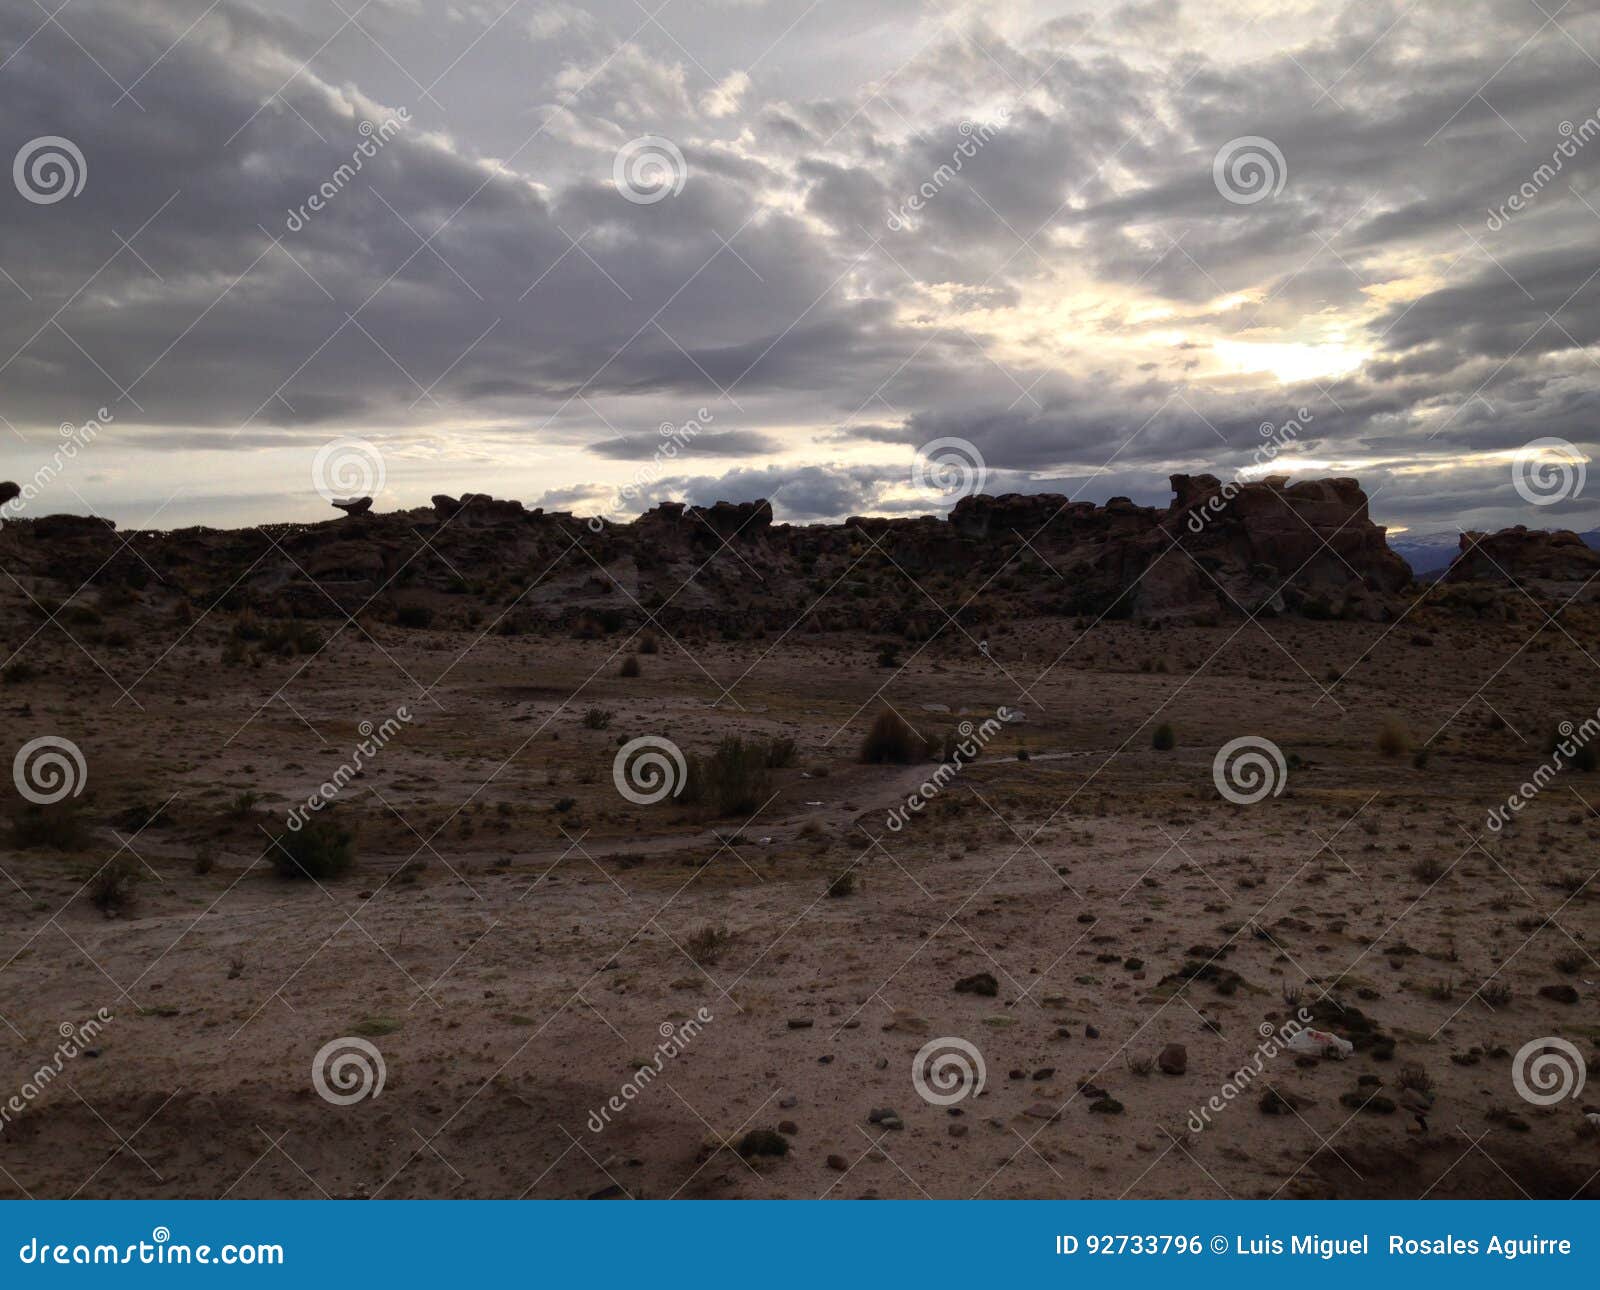 sunrise in the altiplano of bolivia ii